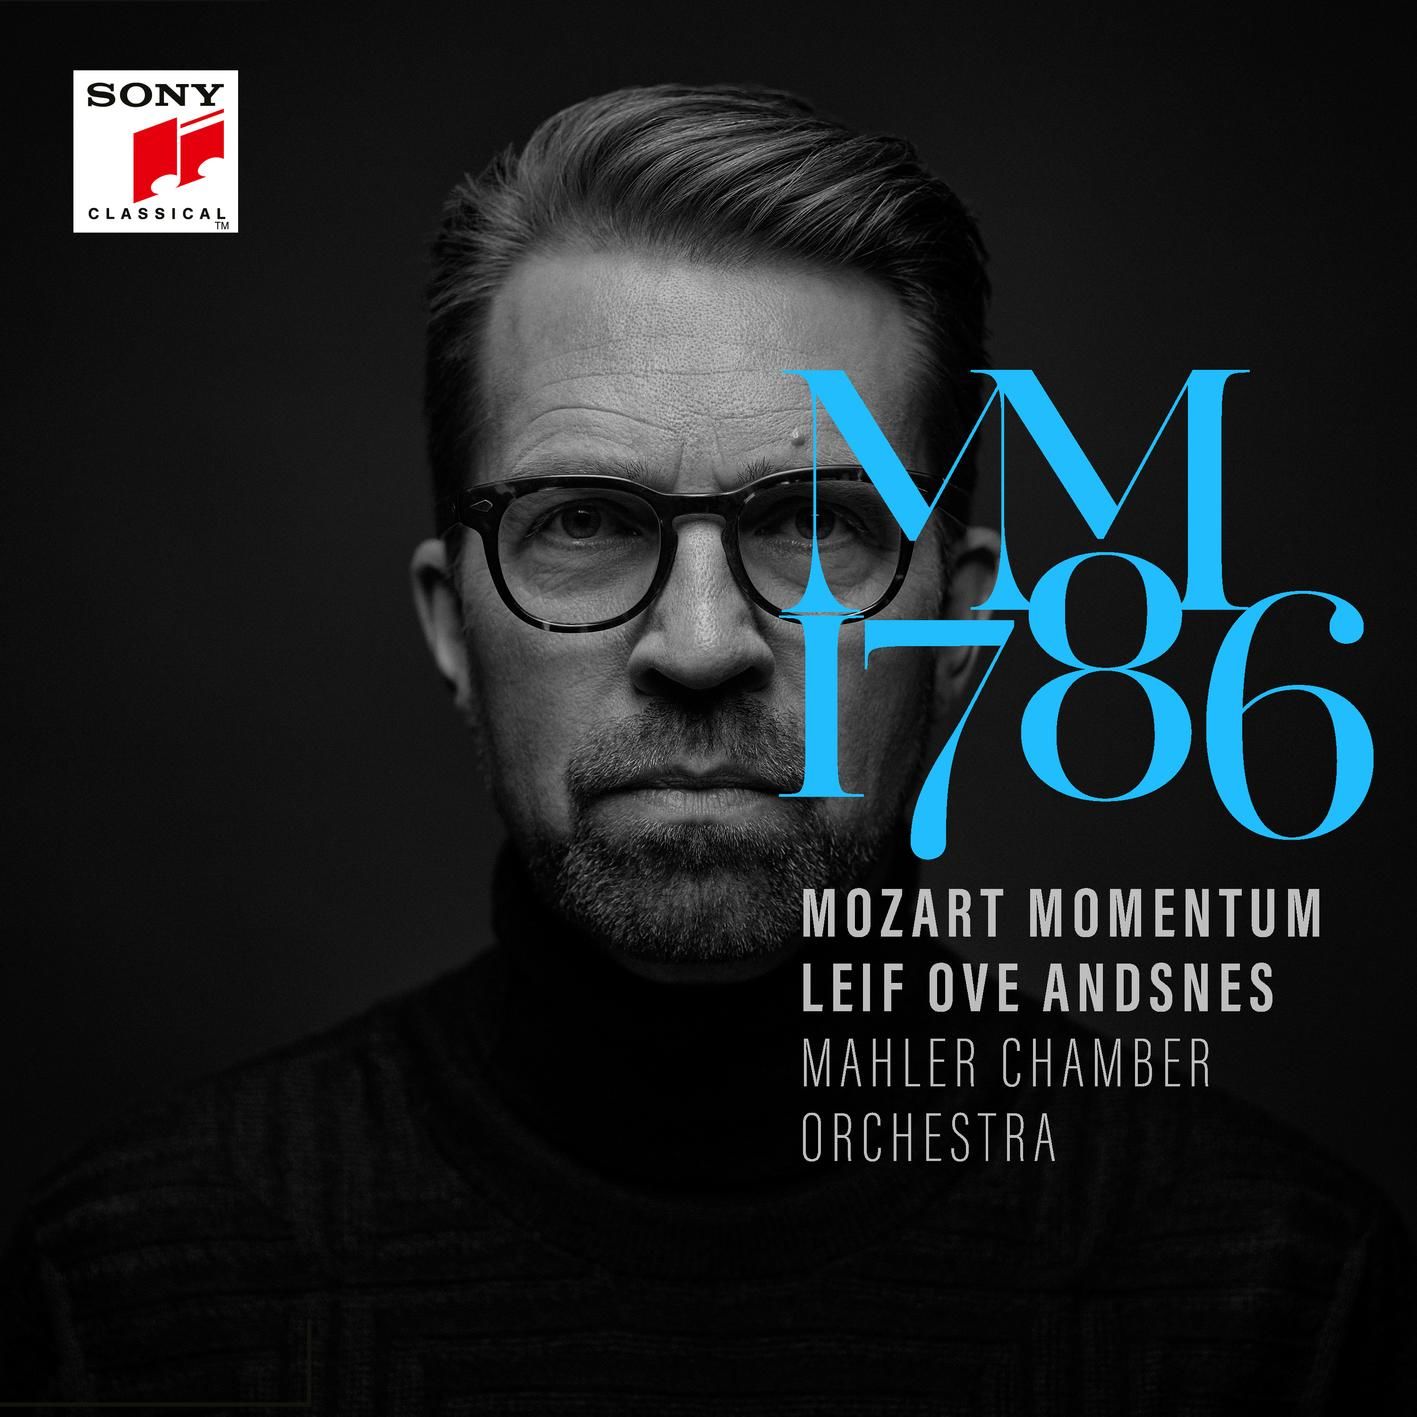 Leif Ove Andsnes - Mozart Momentum 1786 24-96